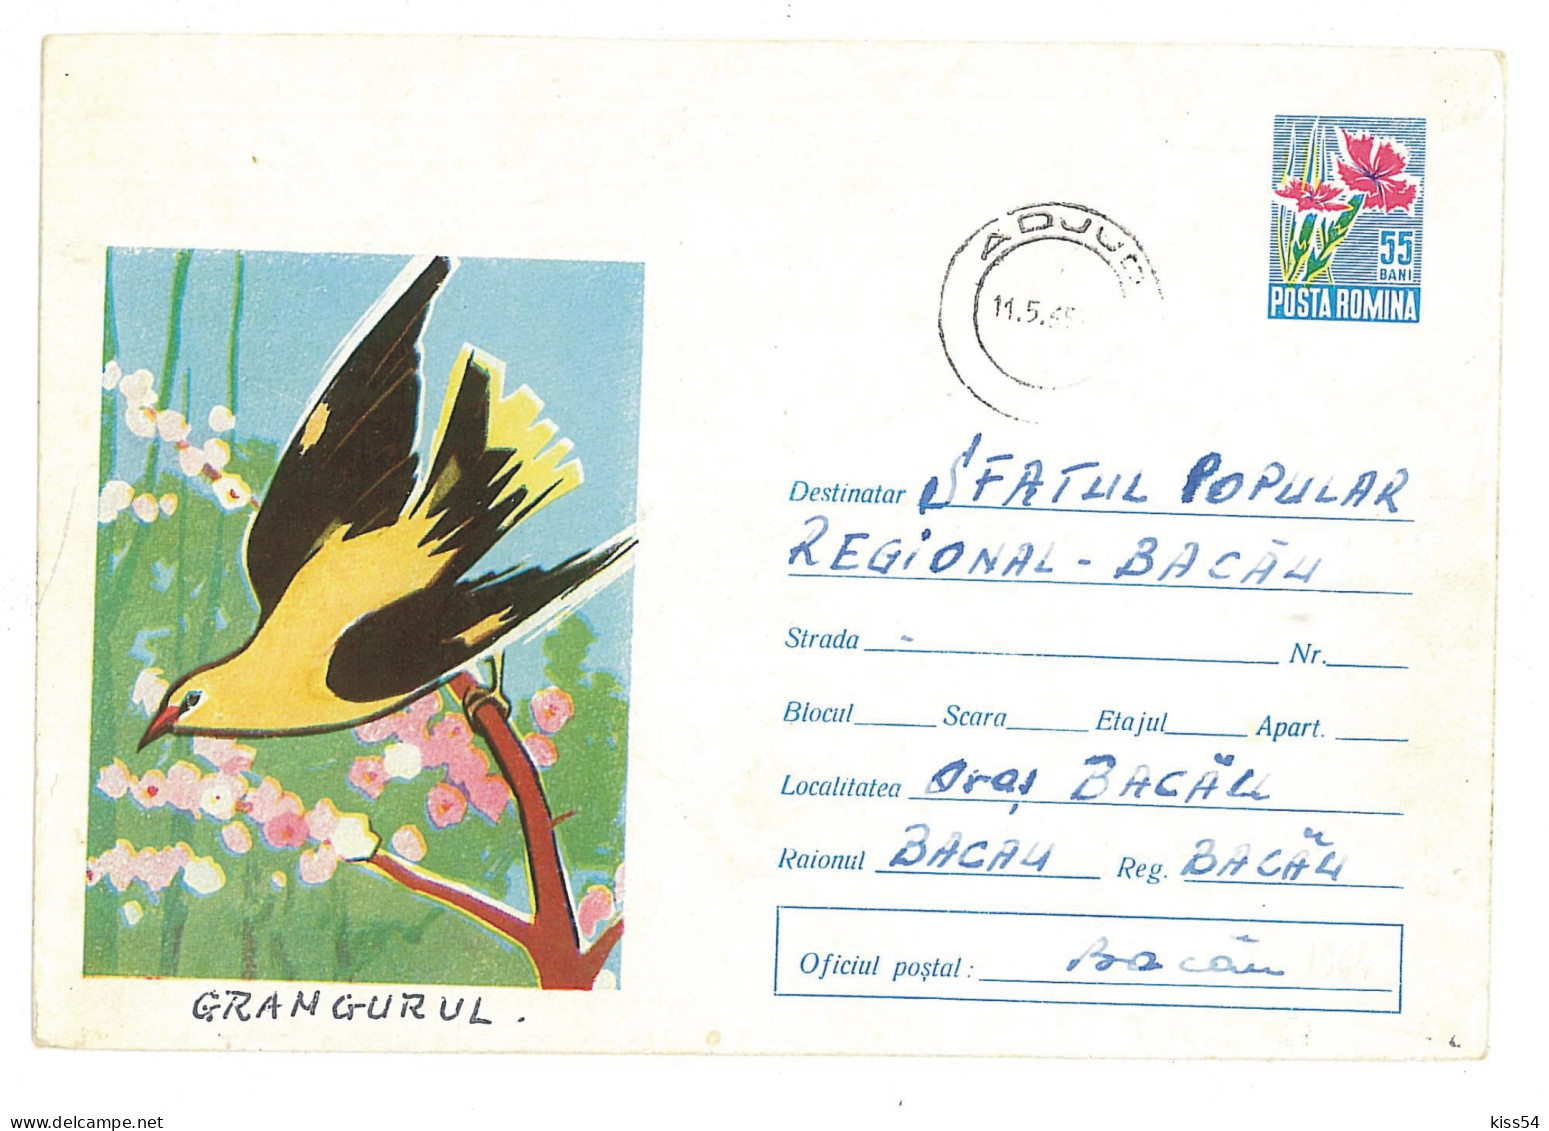 IP 64 A - 0201b Bird, ORIOLE, Romania - Stationery - Used - 1964 - Climbing Birds